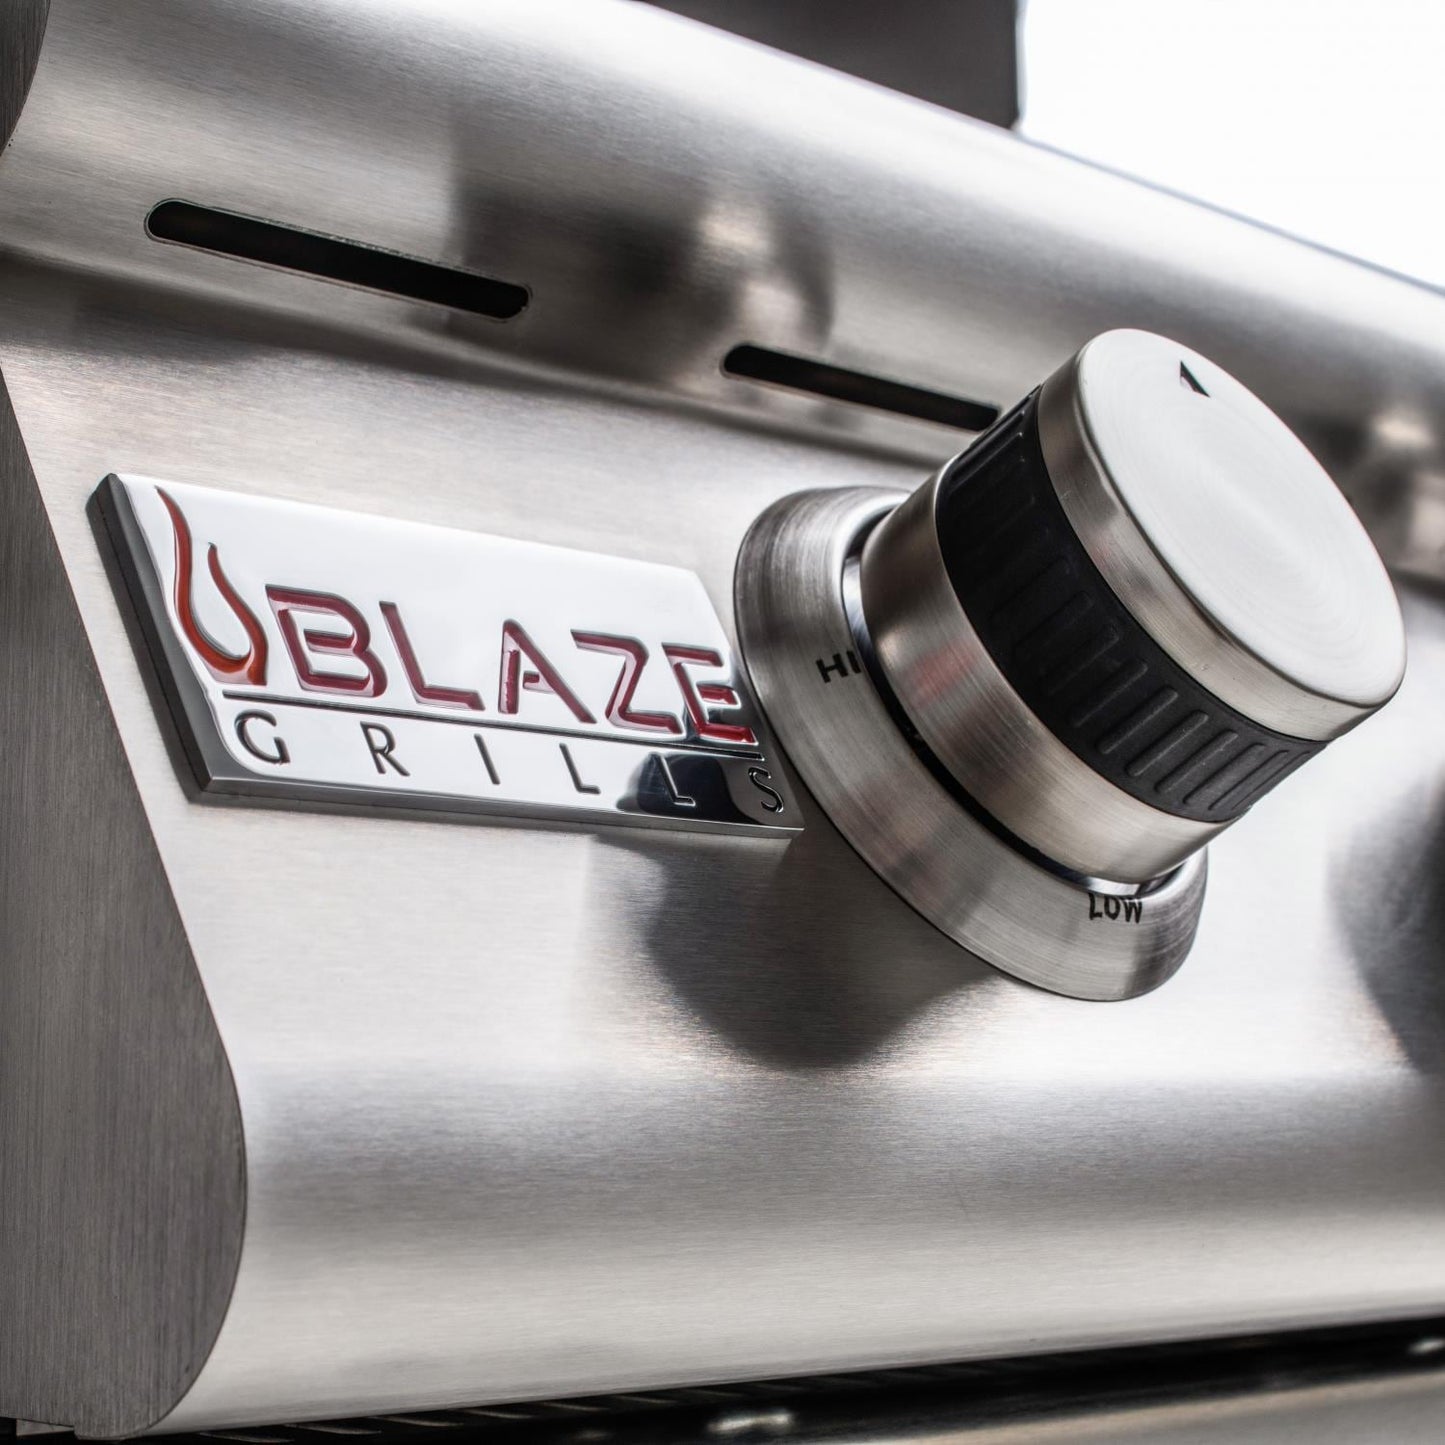 Blaze Prelude 25" LBM 3-Burner Gas Grill